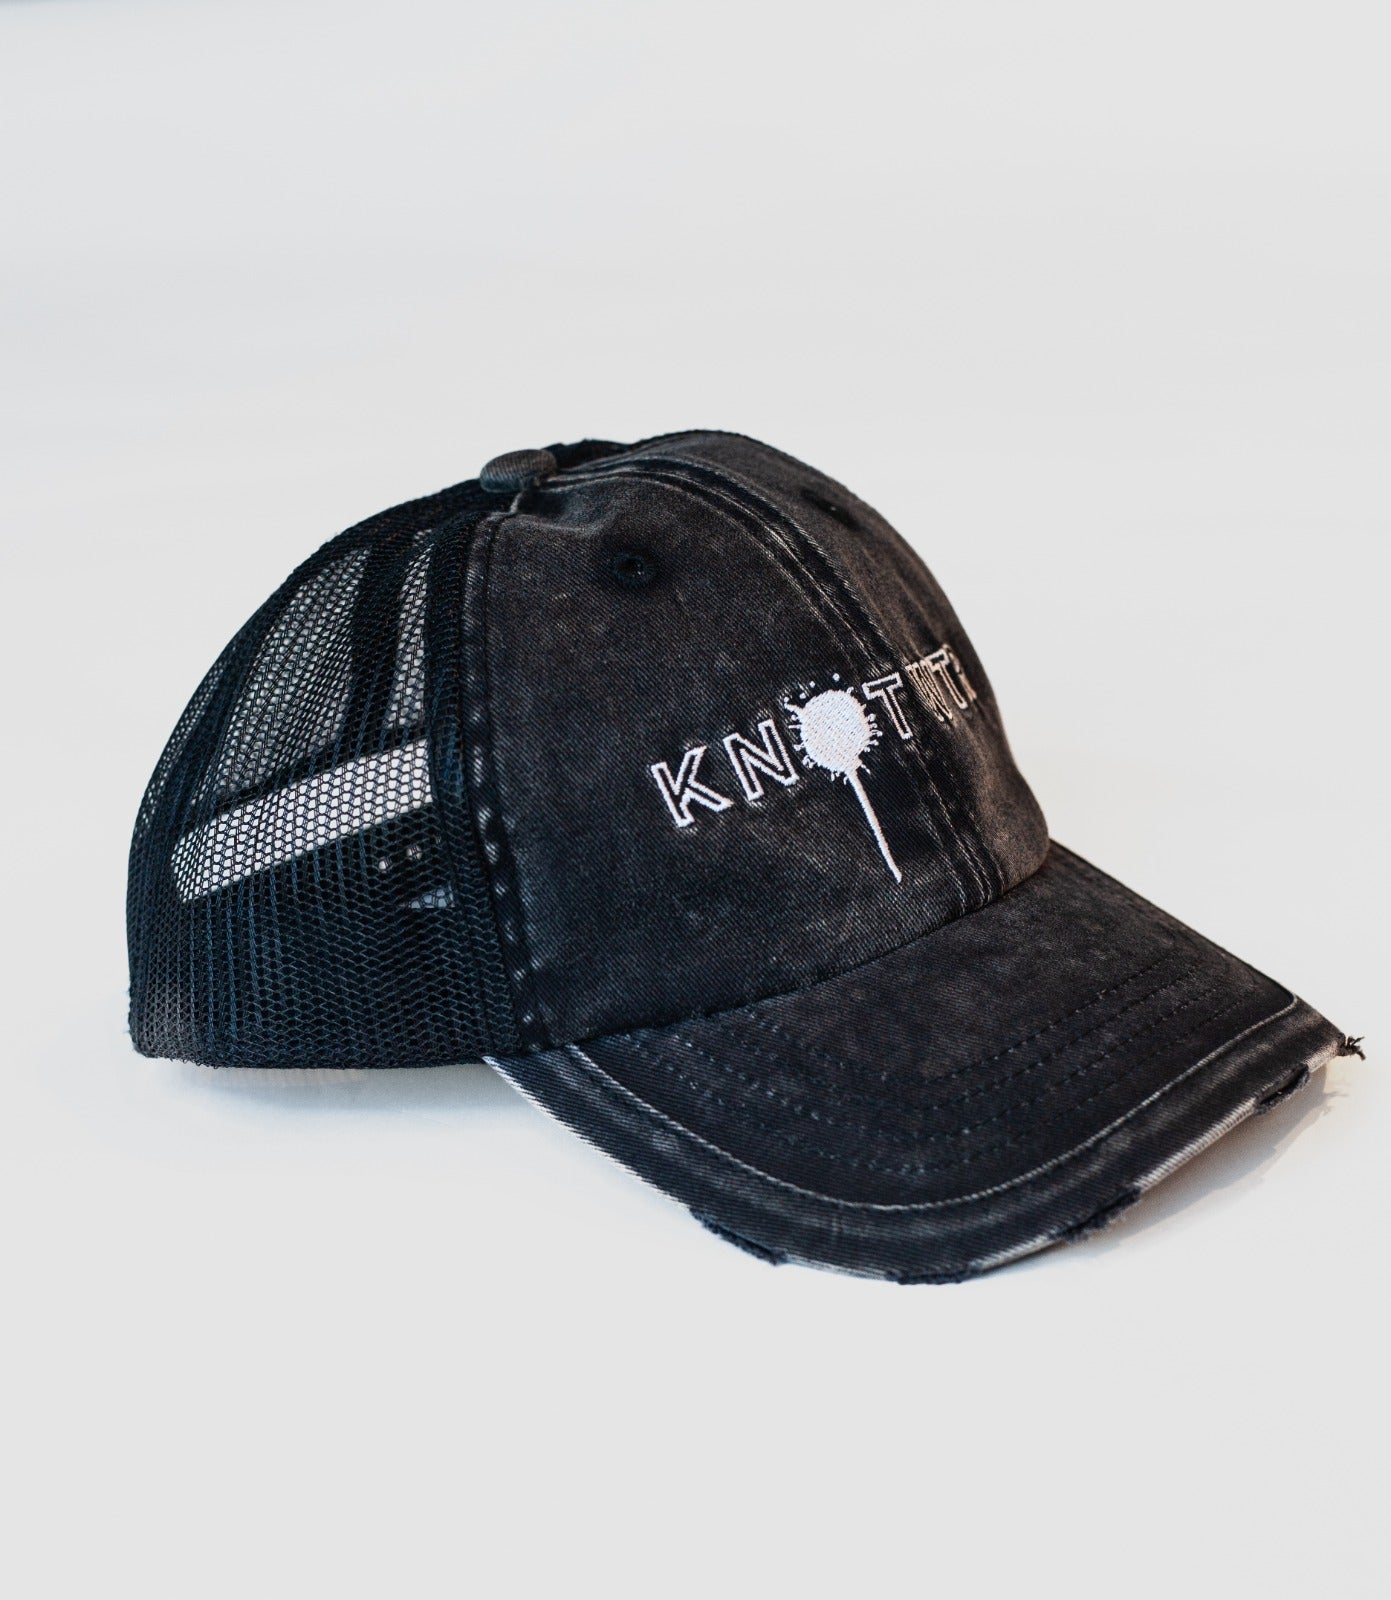 KNOTWTR Black Trucker Hat